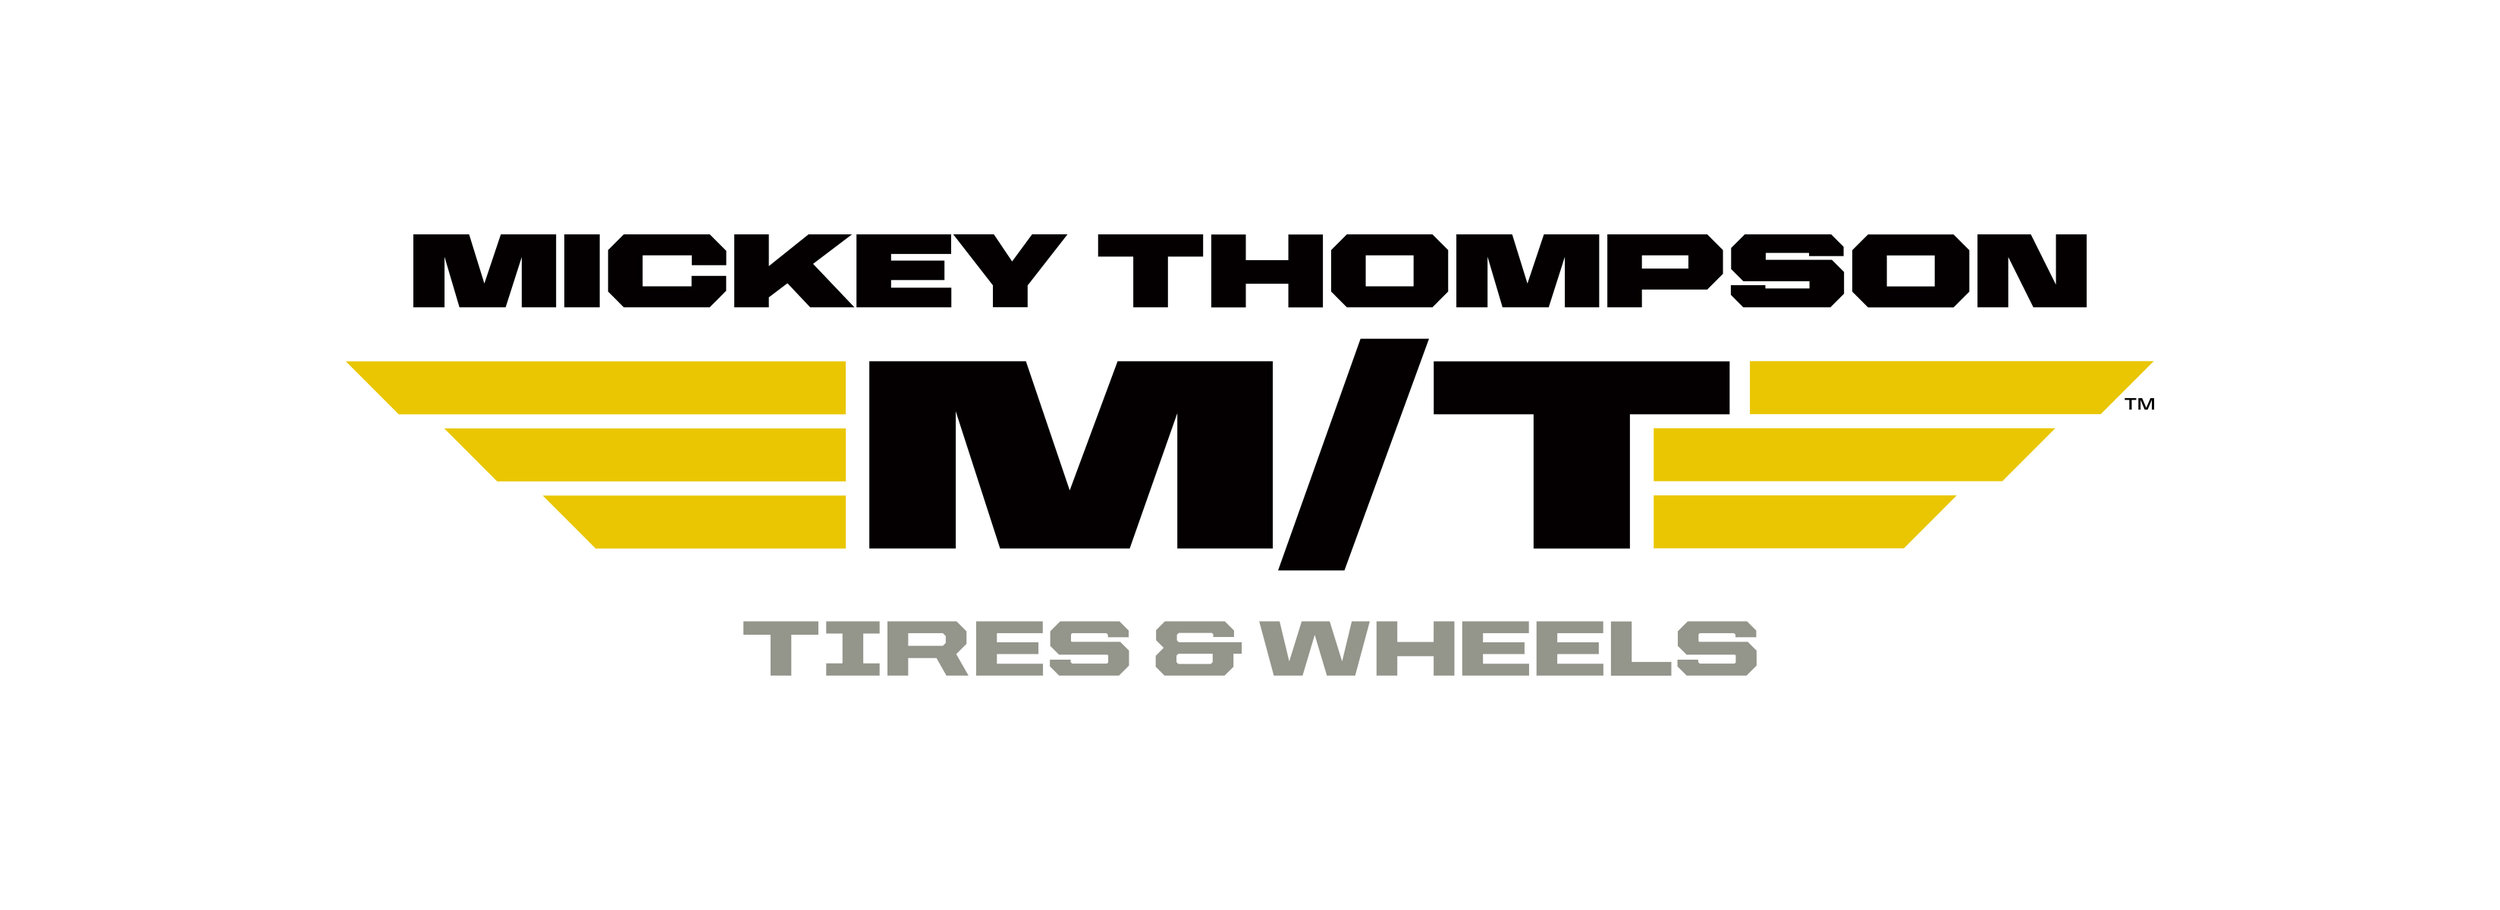 Mickey Thompson Tires & Wheels (Copy)